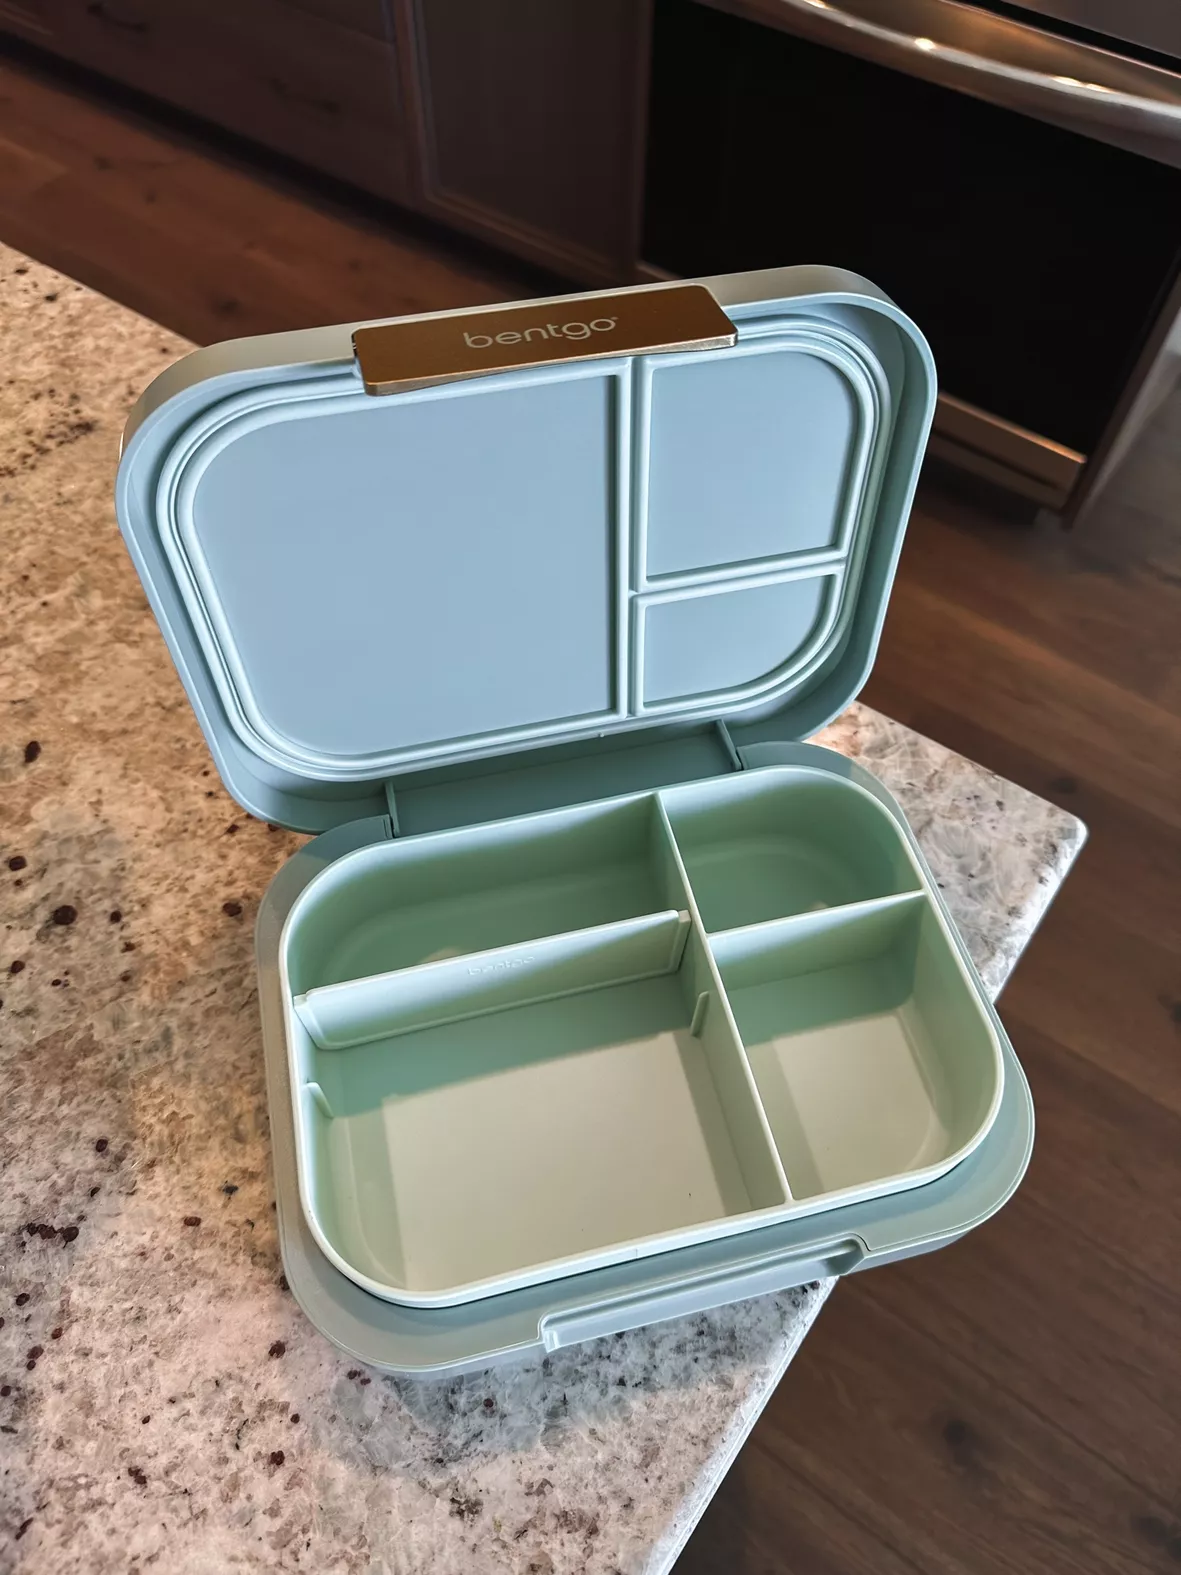 Bentgo Modern Adult Leak-Proof Lunch Box